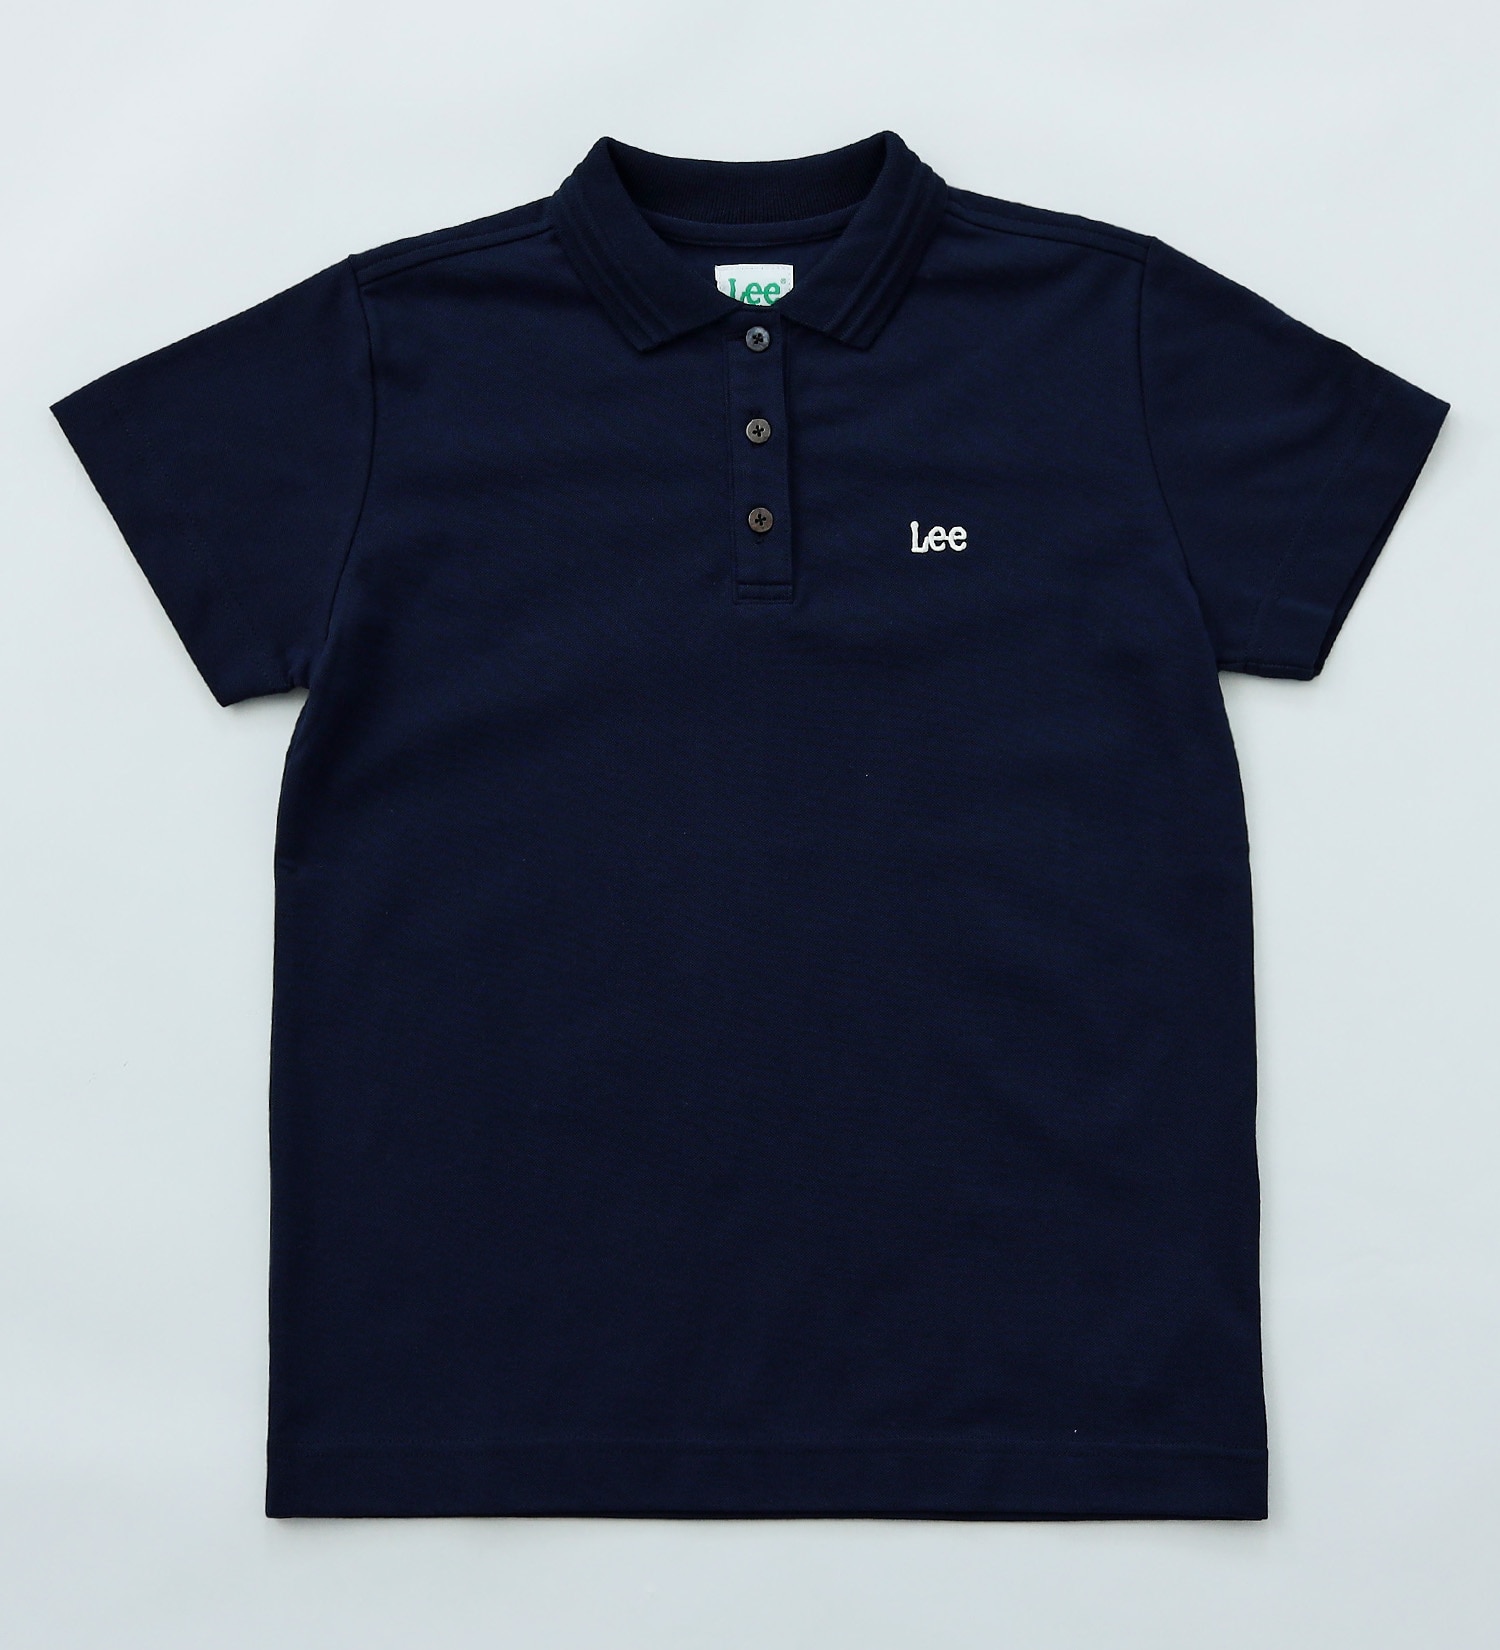 Lee(リー)の【Lee GOLF】レディース 吸水速乾 Leeロゴ刺繍 半袖ポロシャツ|トップス/ポロシャツ/レディース|ネイビー